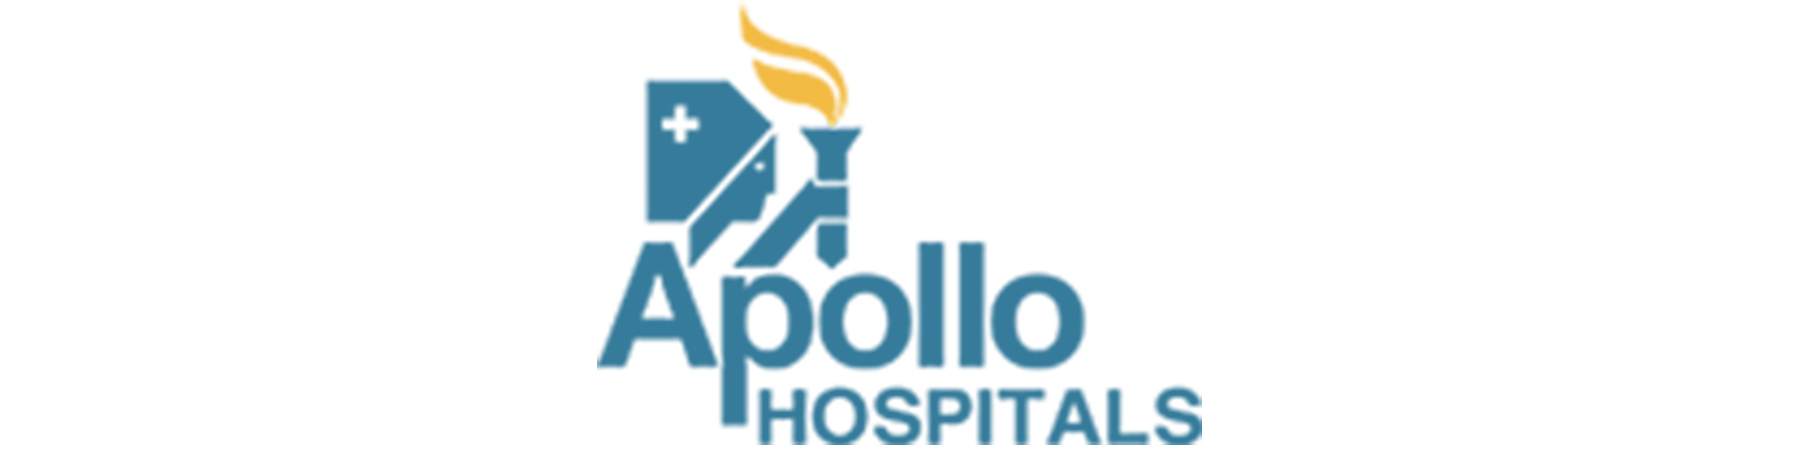 Appolo Hospital